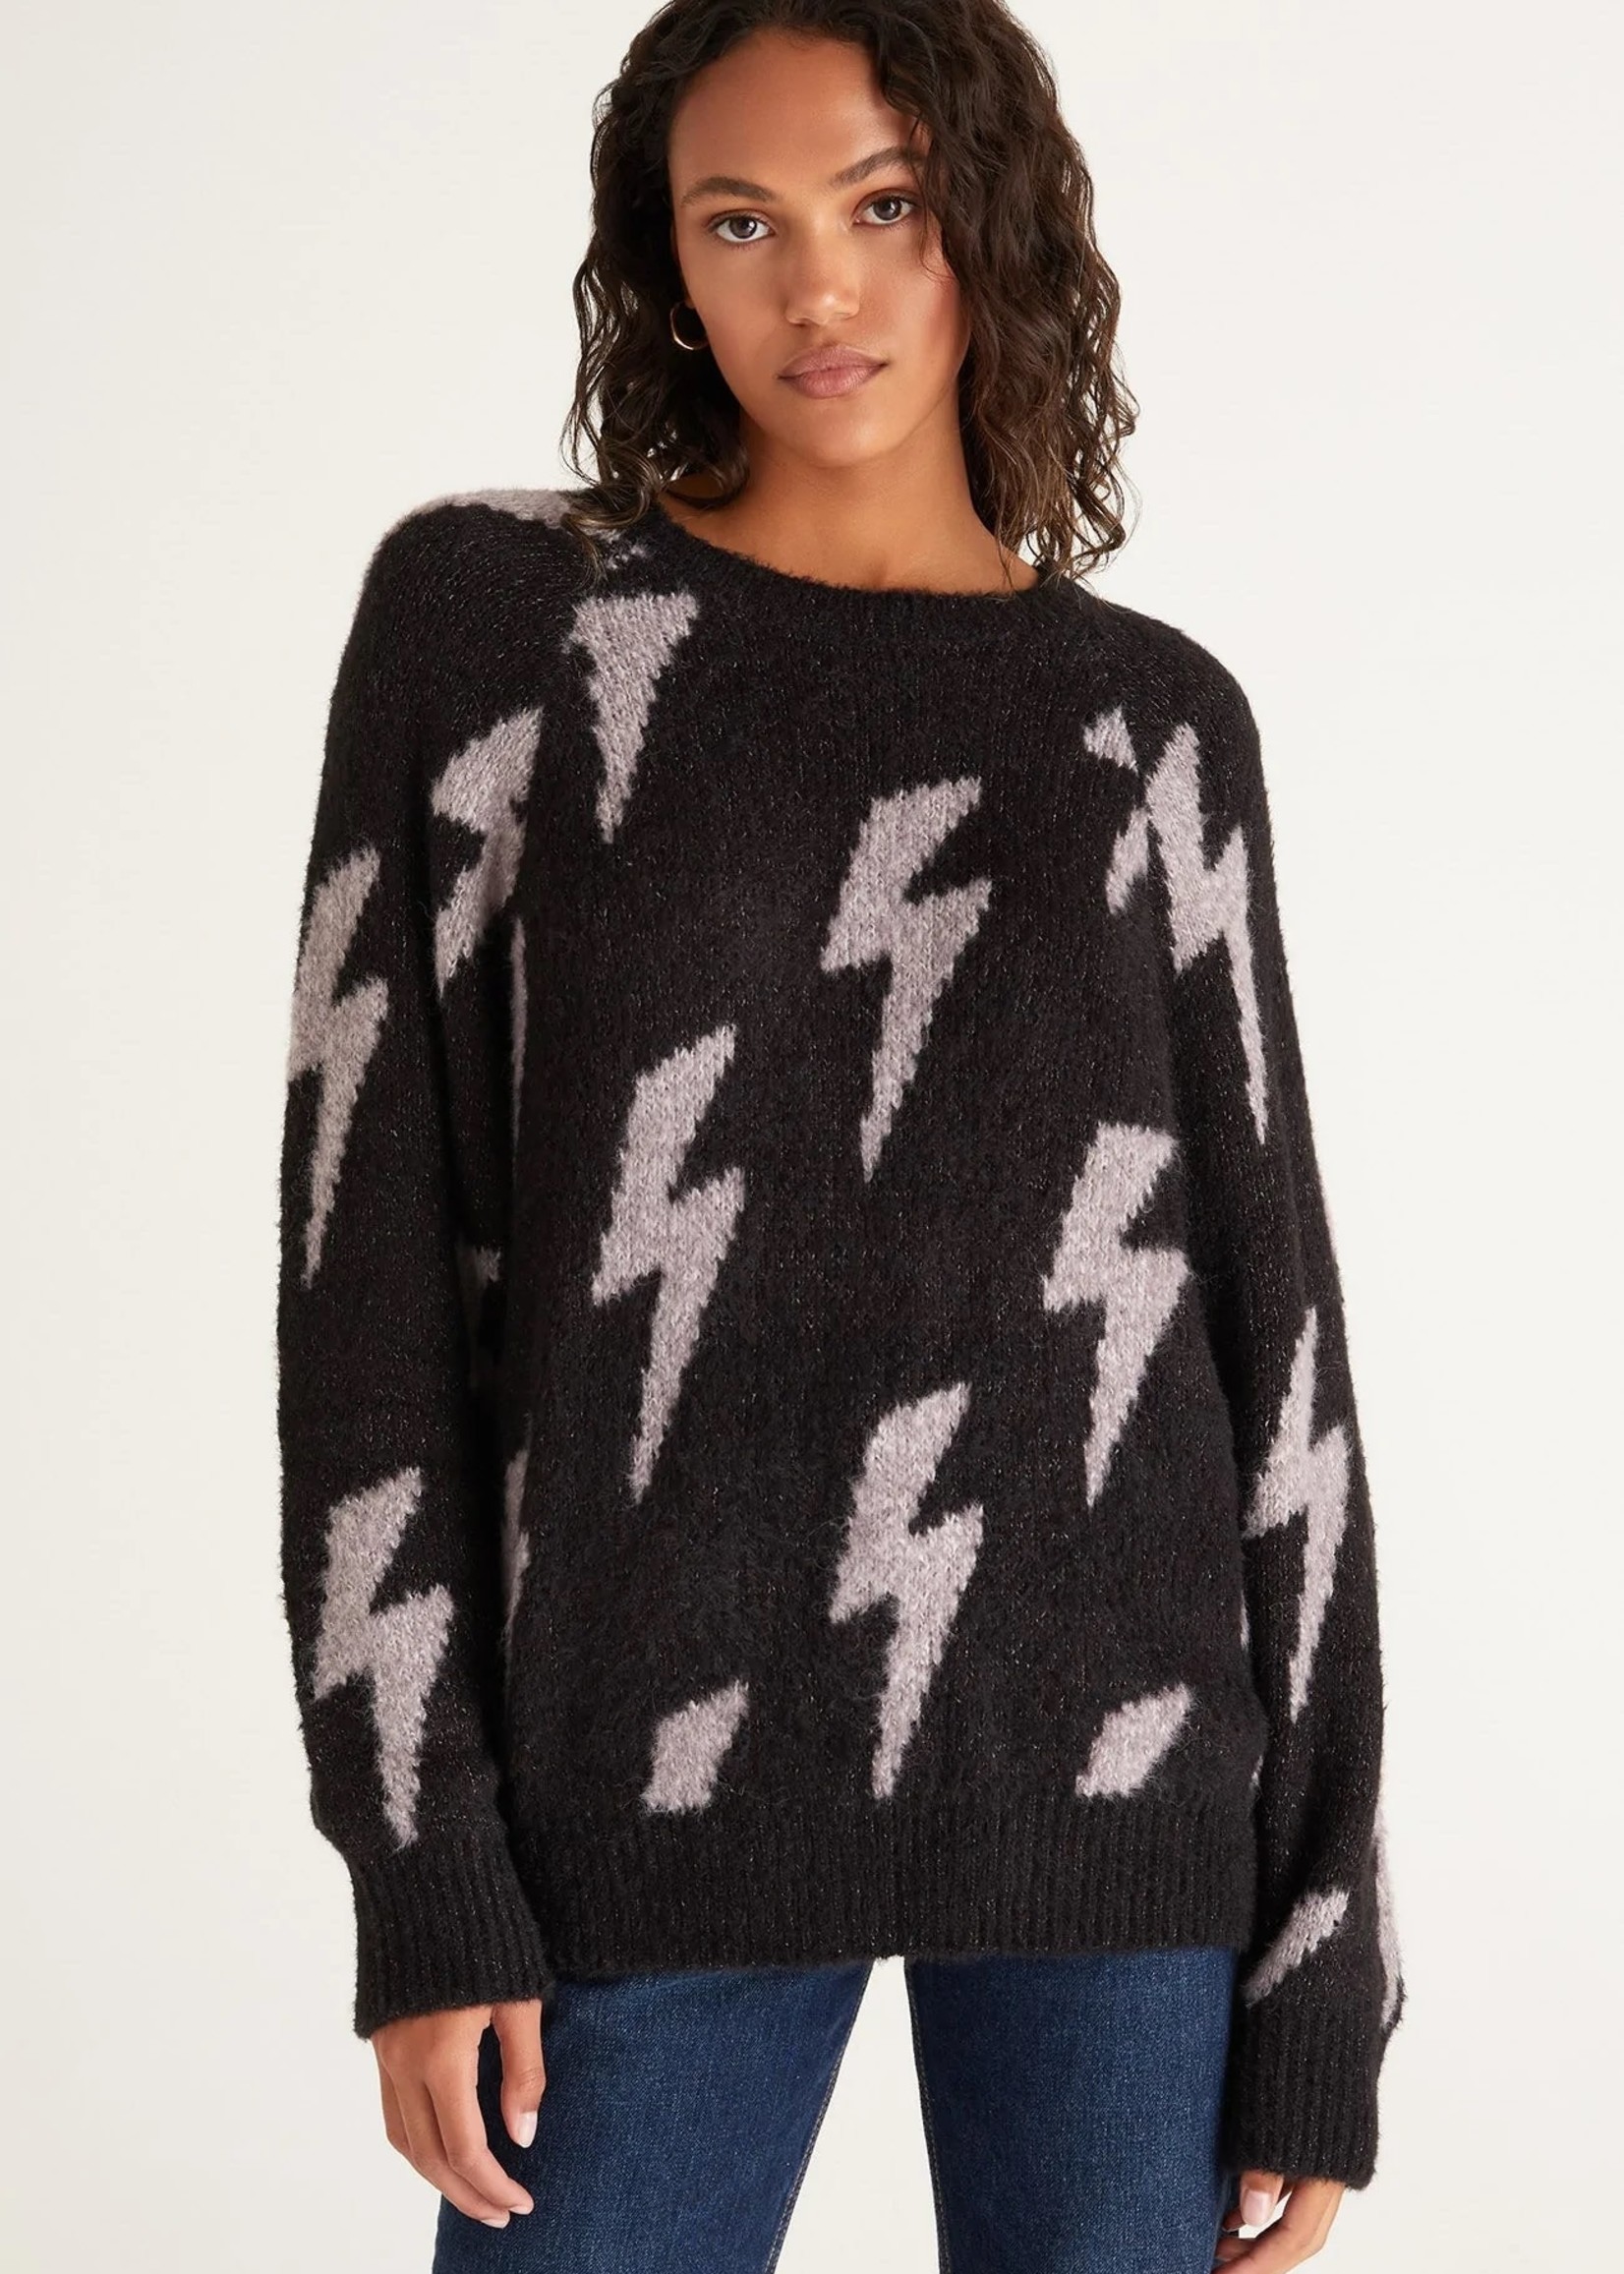 Z supply Lizzy Marled Bolt Sweater